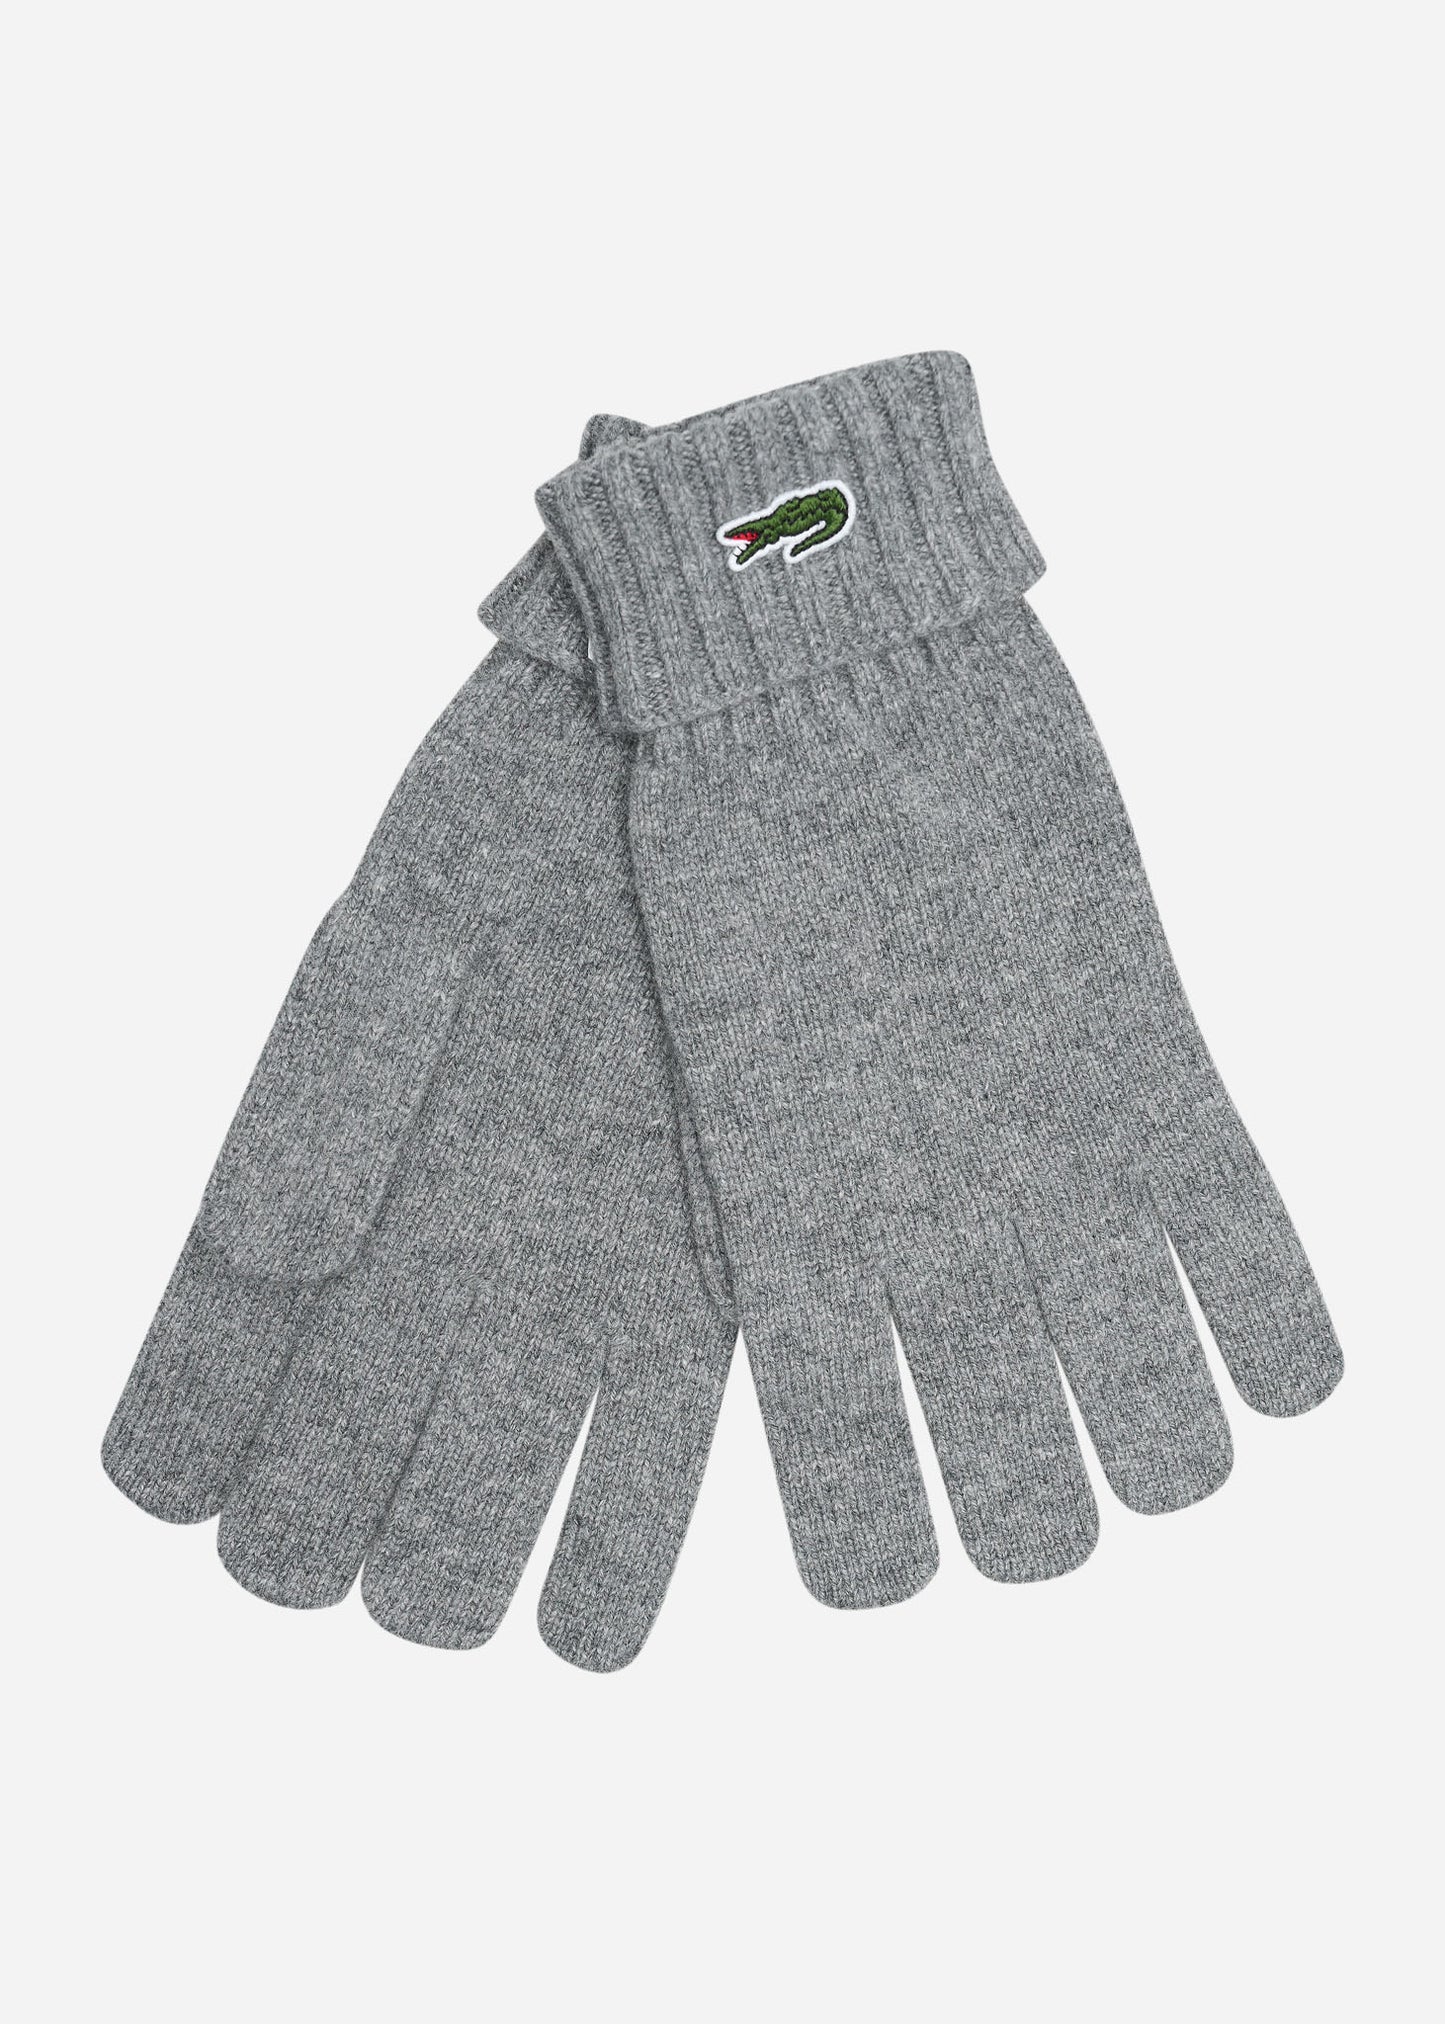 Lacoste handschoenen gloves grey heather agate